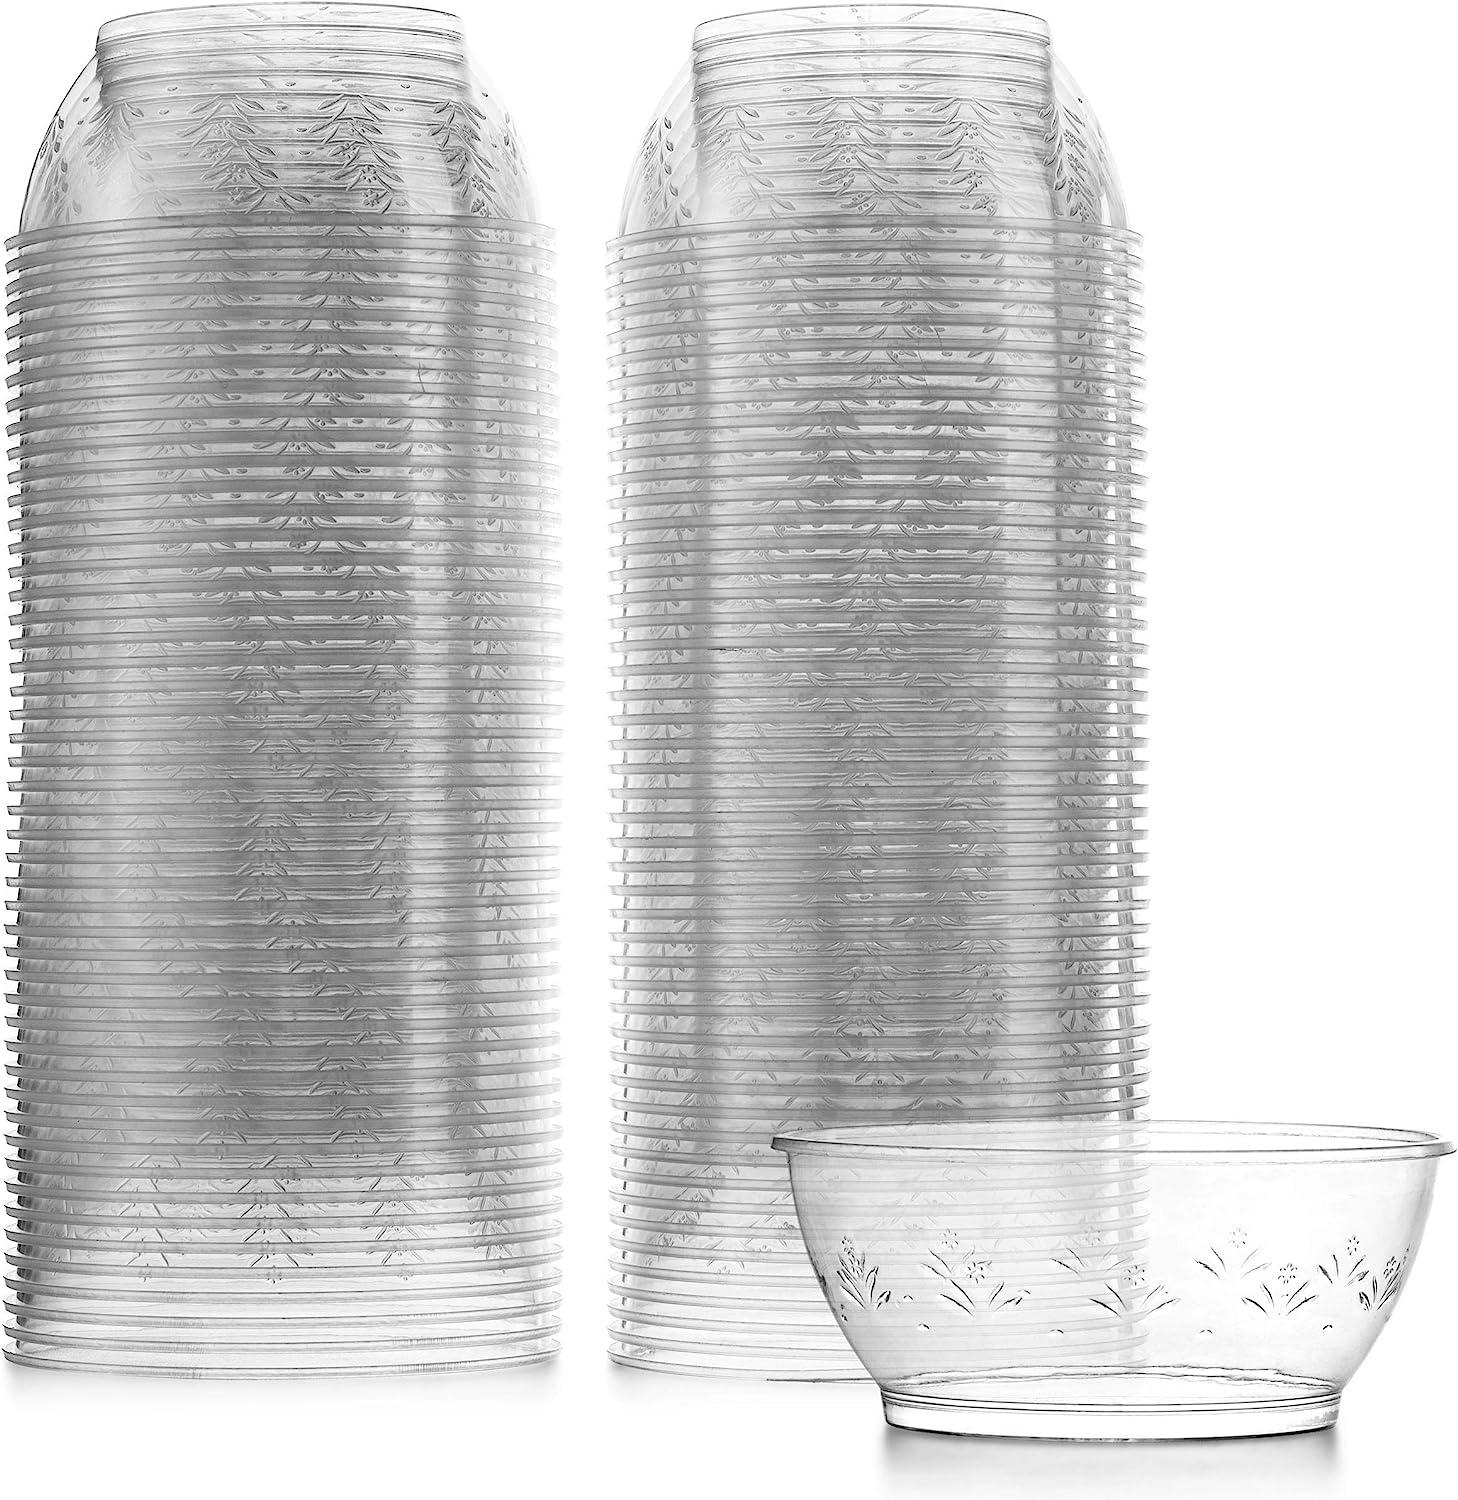 12 Pack  6oz Disposable Hard Plastic Tea Cups